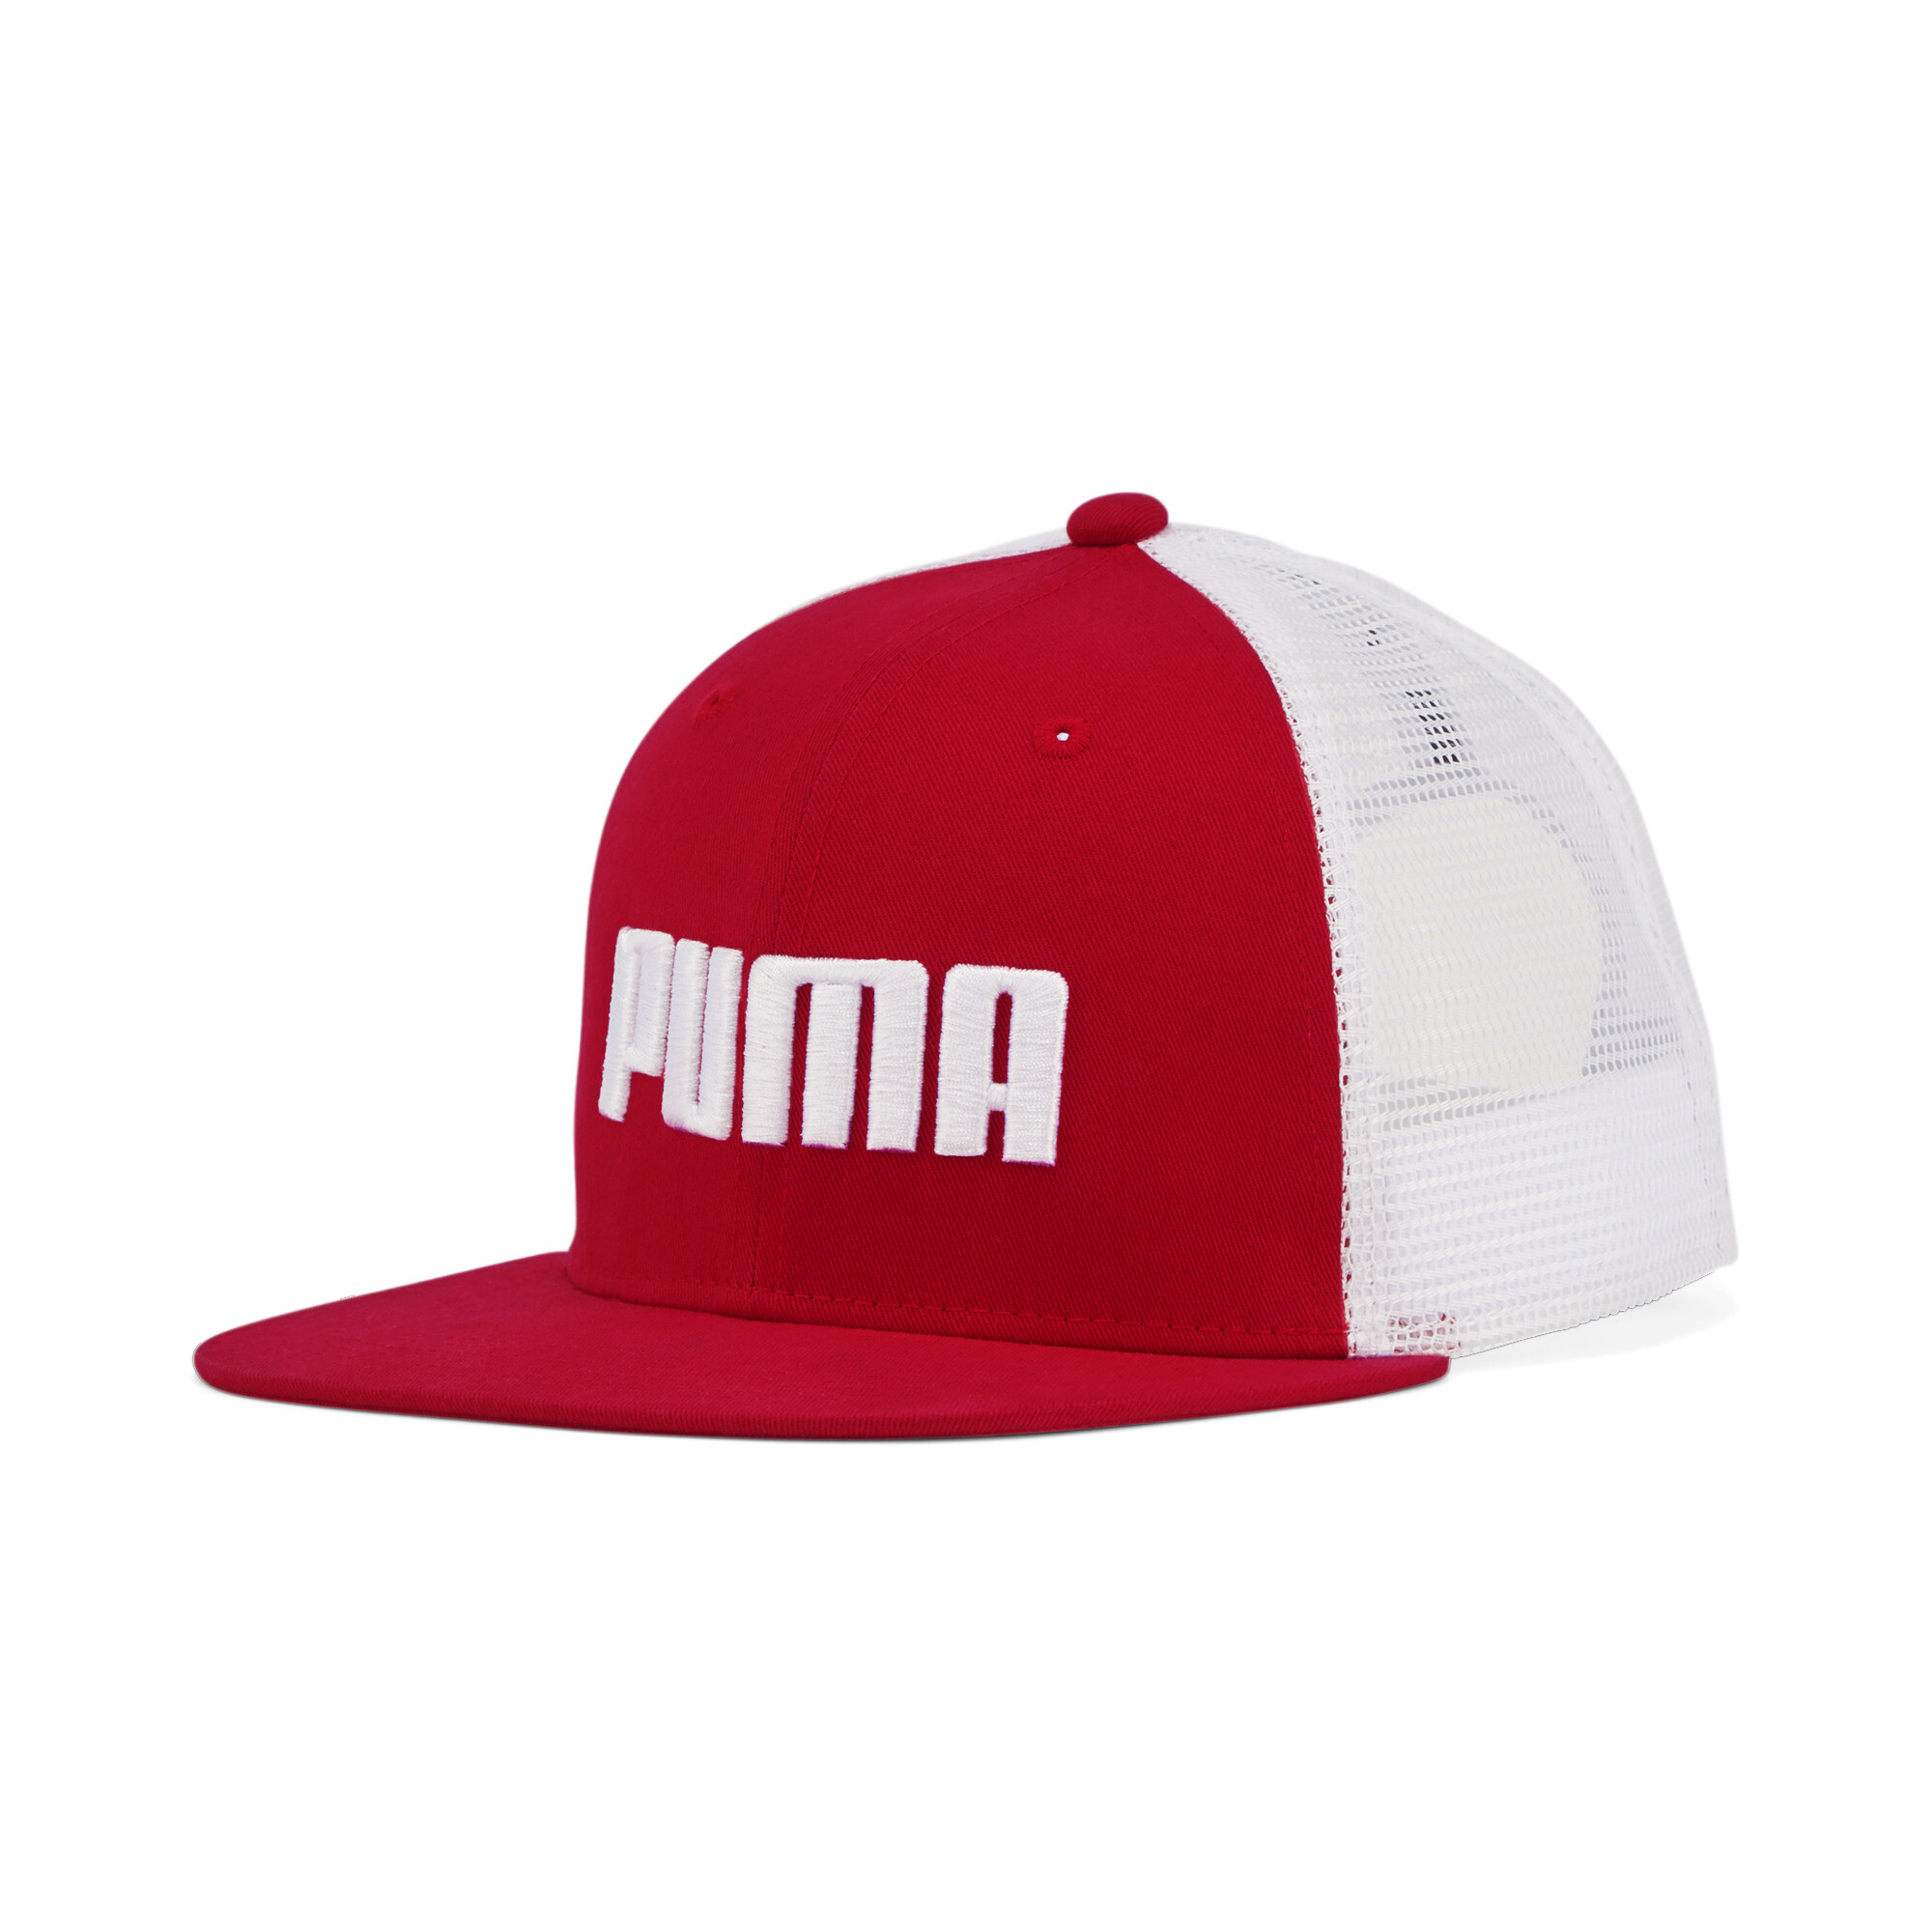 PUMA Men's Spiral Trucker Cap